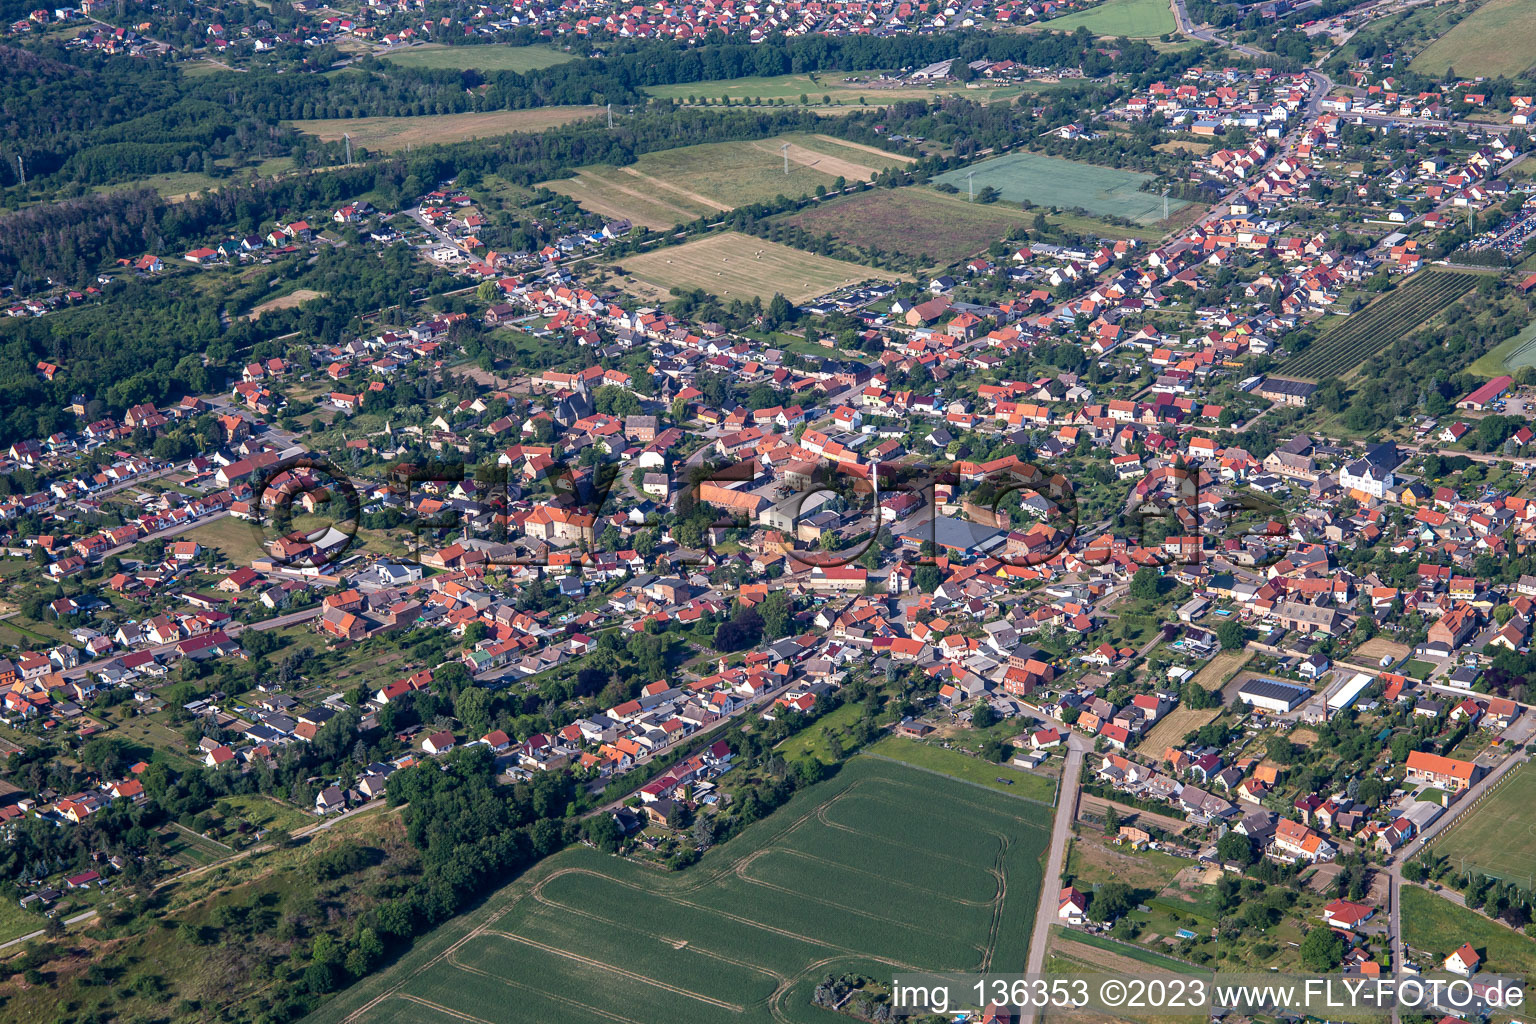 District Rieder in Ballenstedt in the state Saxony-Anhalt, Germany